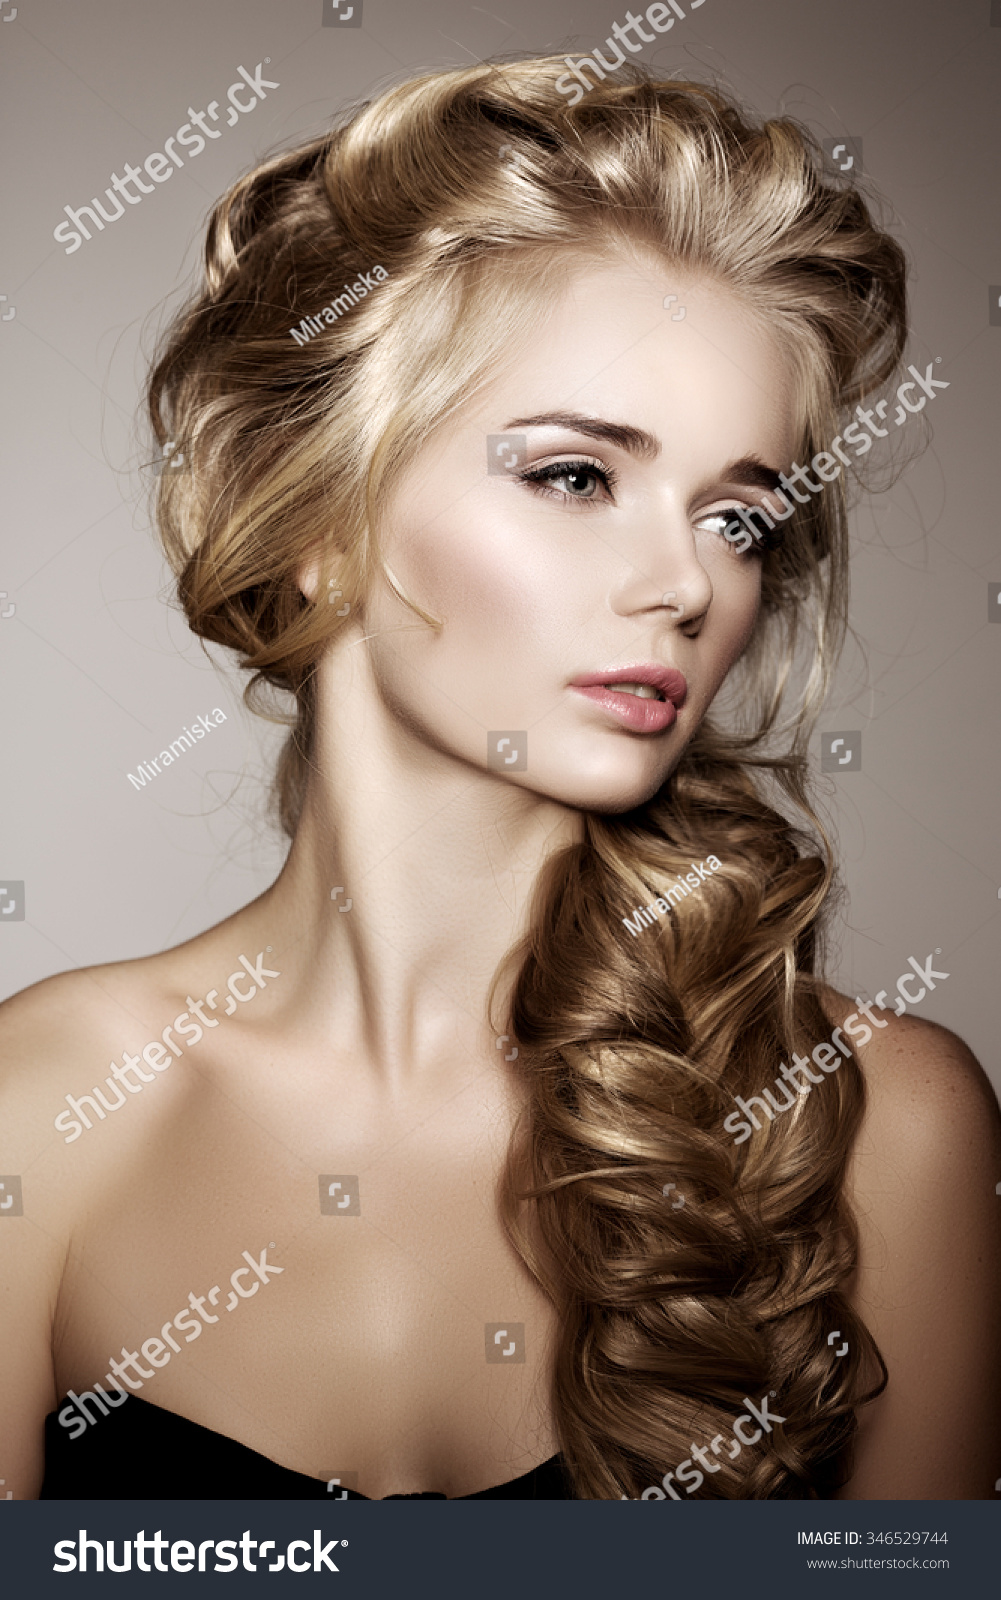 Modell Mit Langgeflochtenen Haaren Waves Curls Stockfoto Jetzt Bearbeiten 346529744